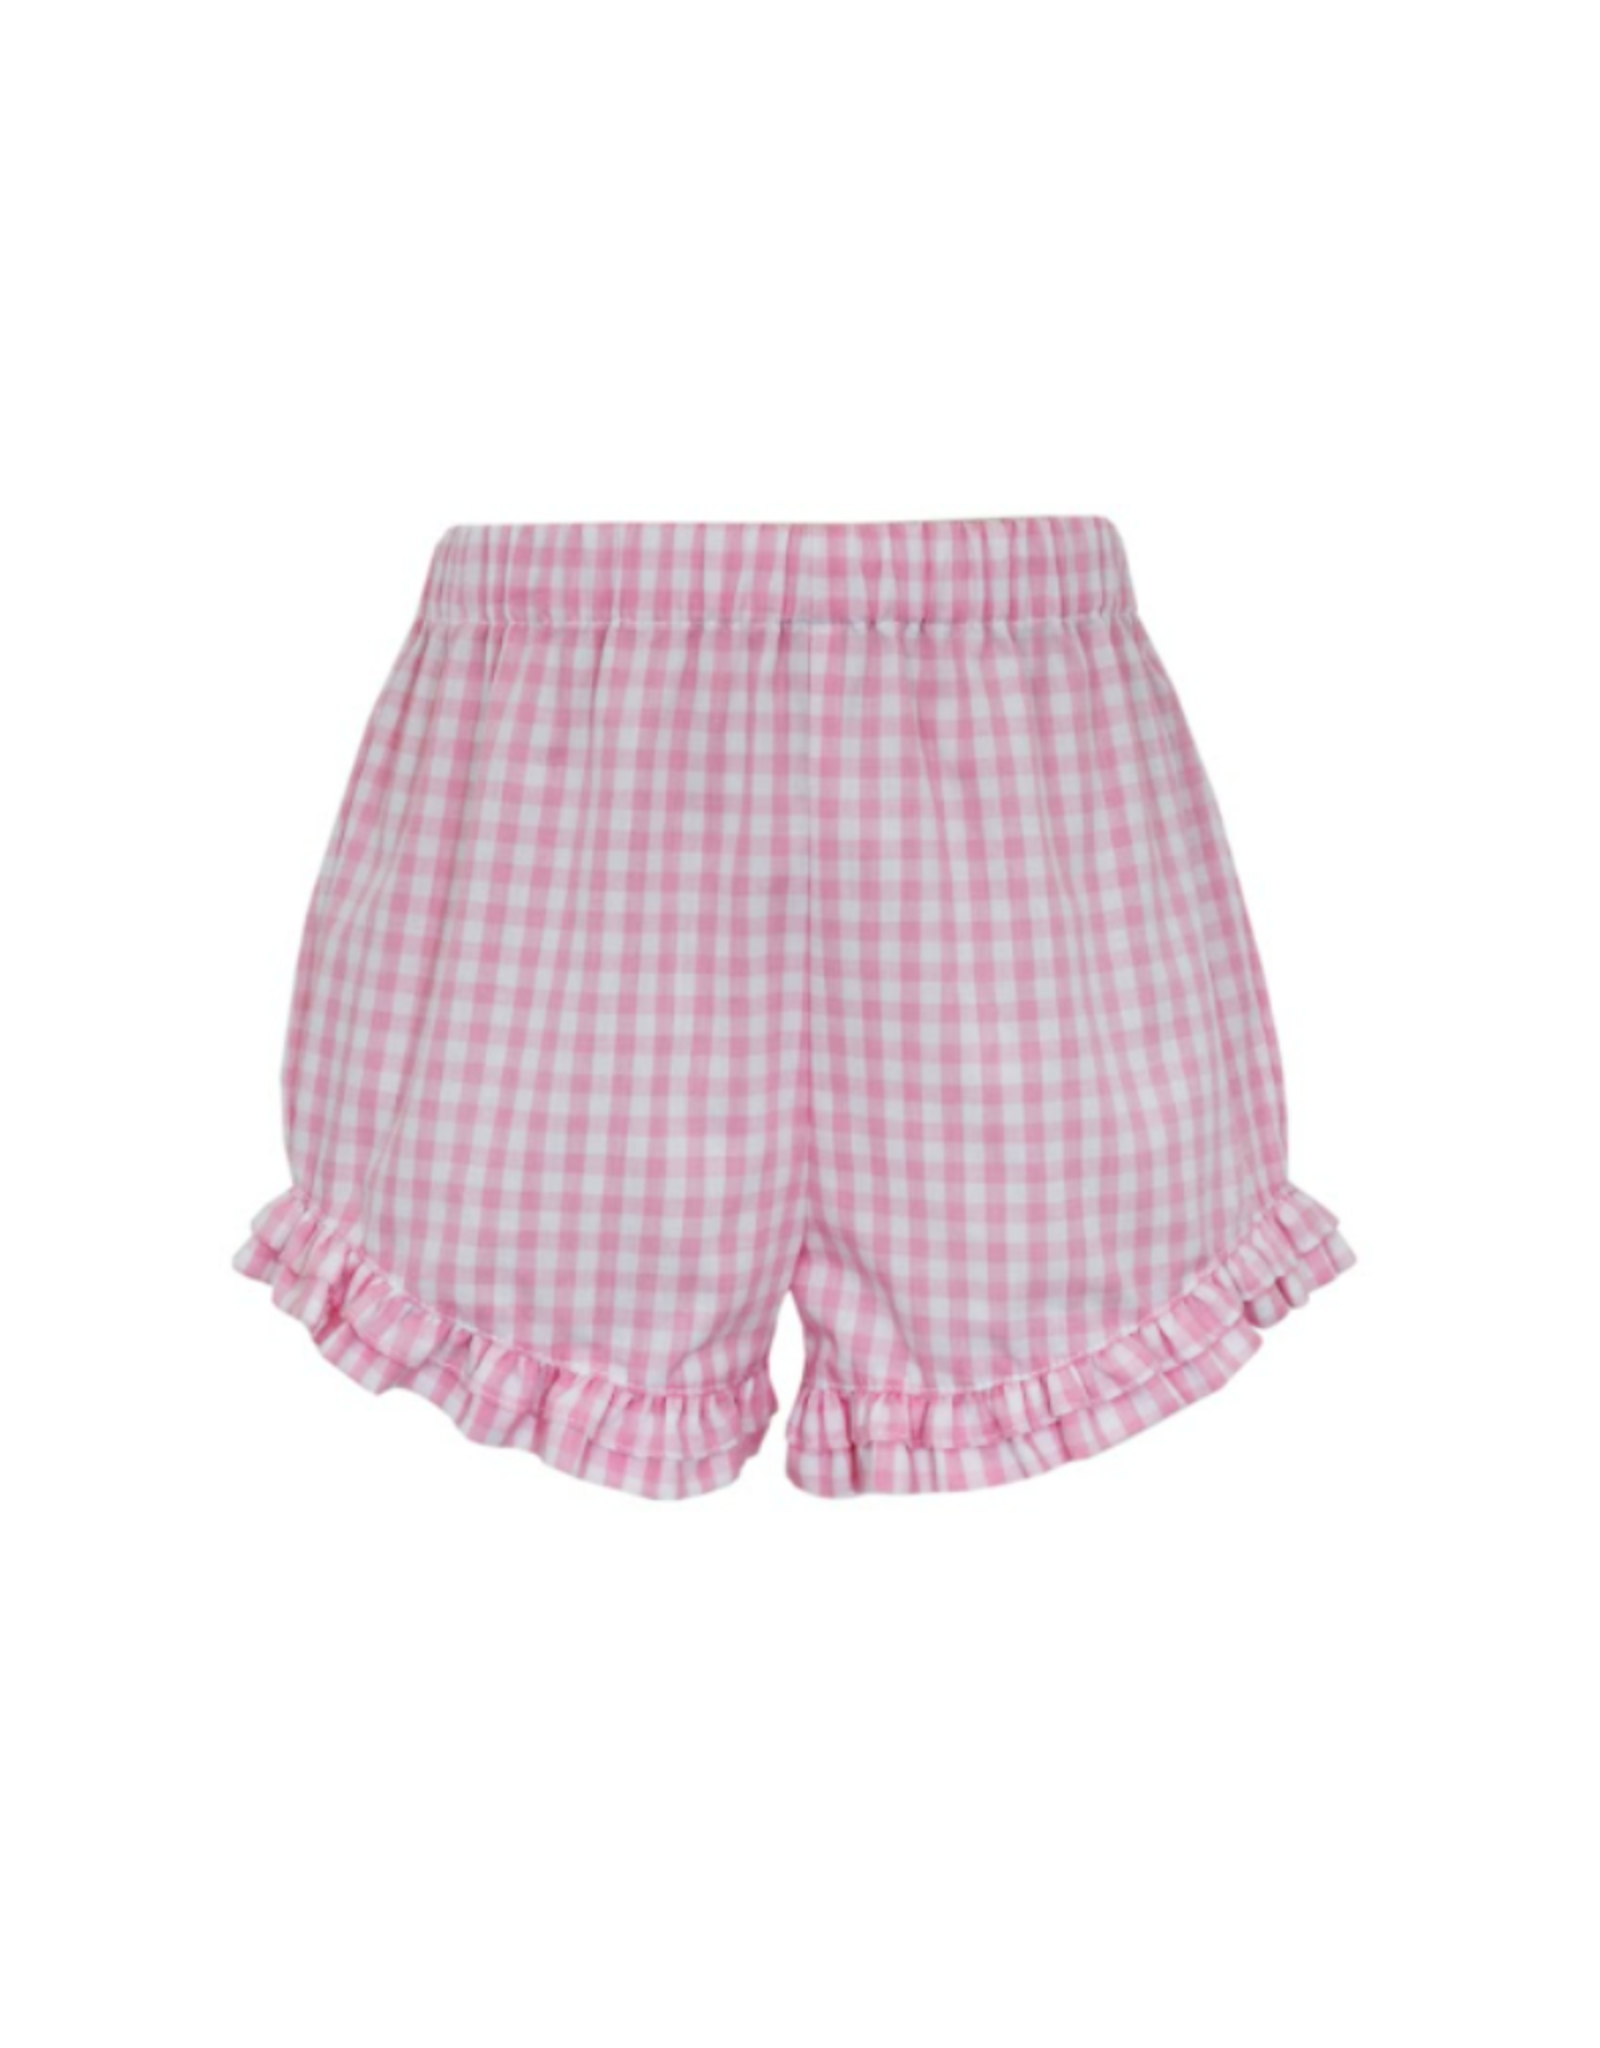 Anavini Pink Check Ruffle Shorts